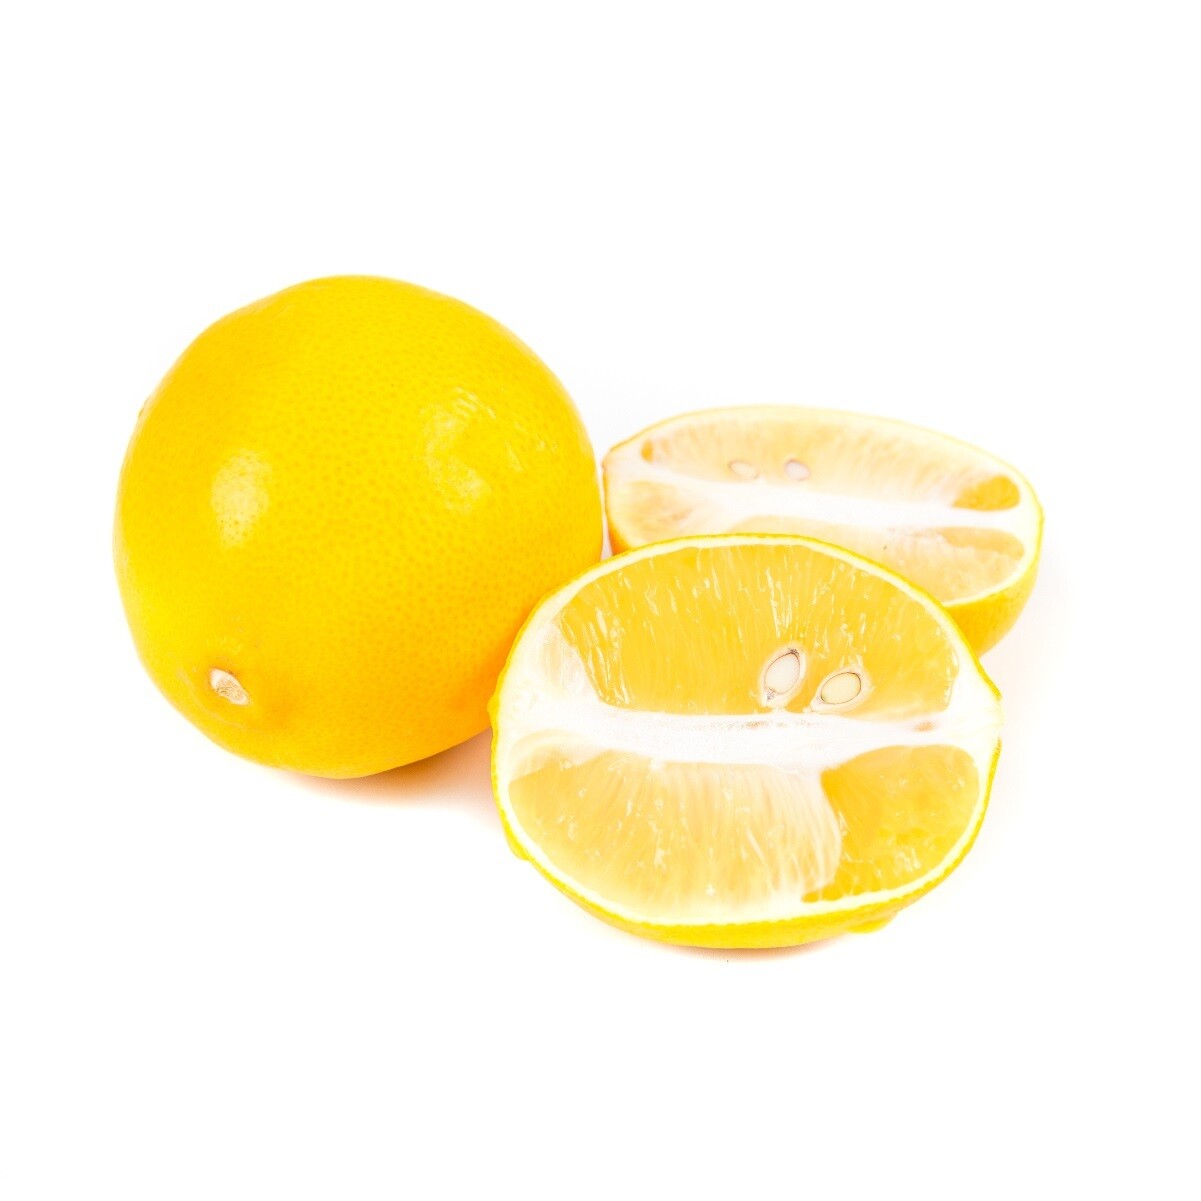 Lemon, Meyers (1 lb.)